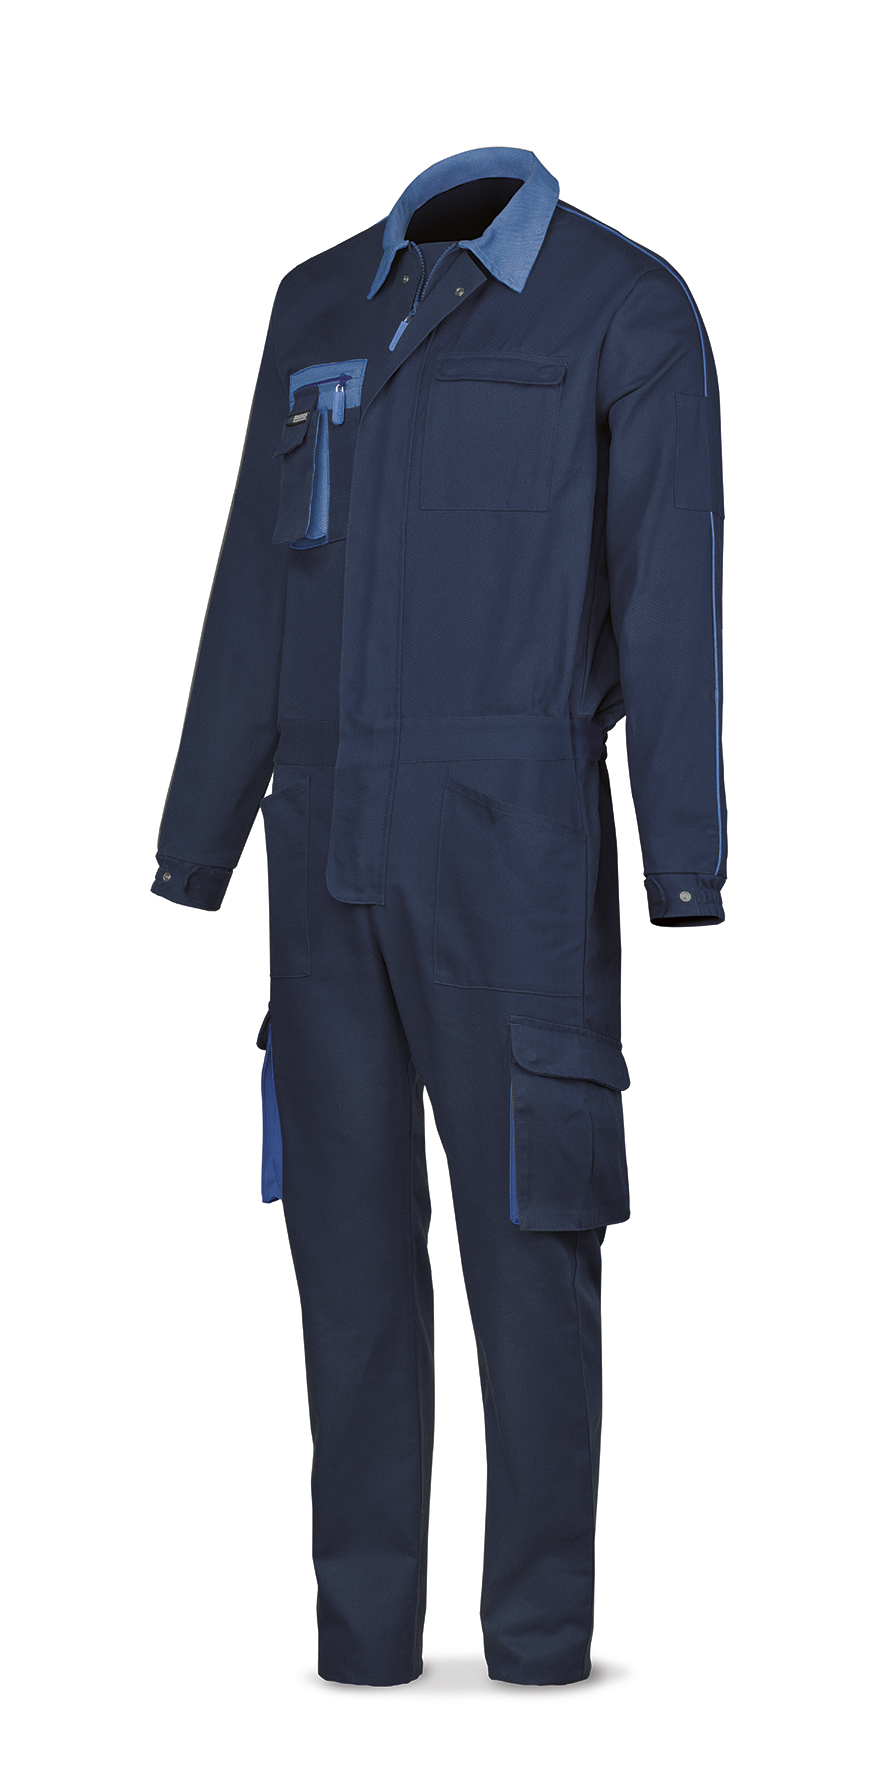 488-BSUPTOPAM Workwear SuperTop Series 270 g cotton navy blue jumpsuit. Multi-pockets